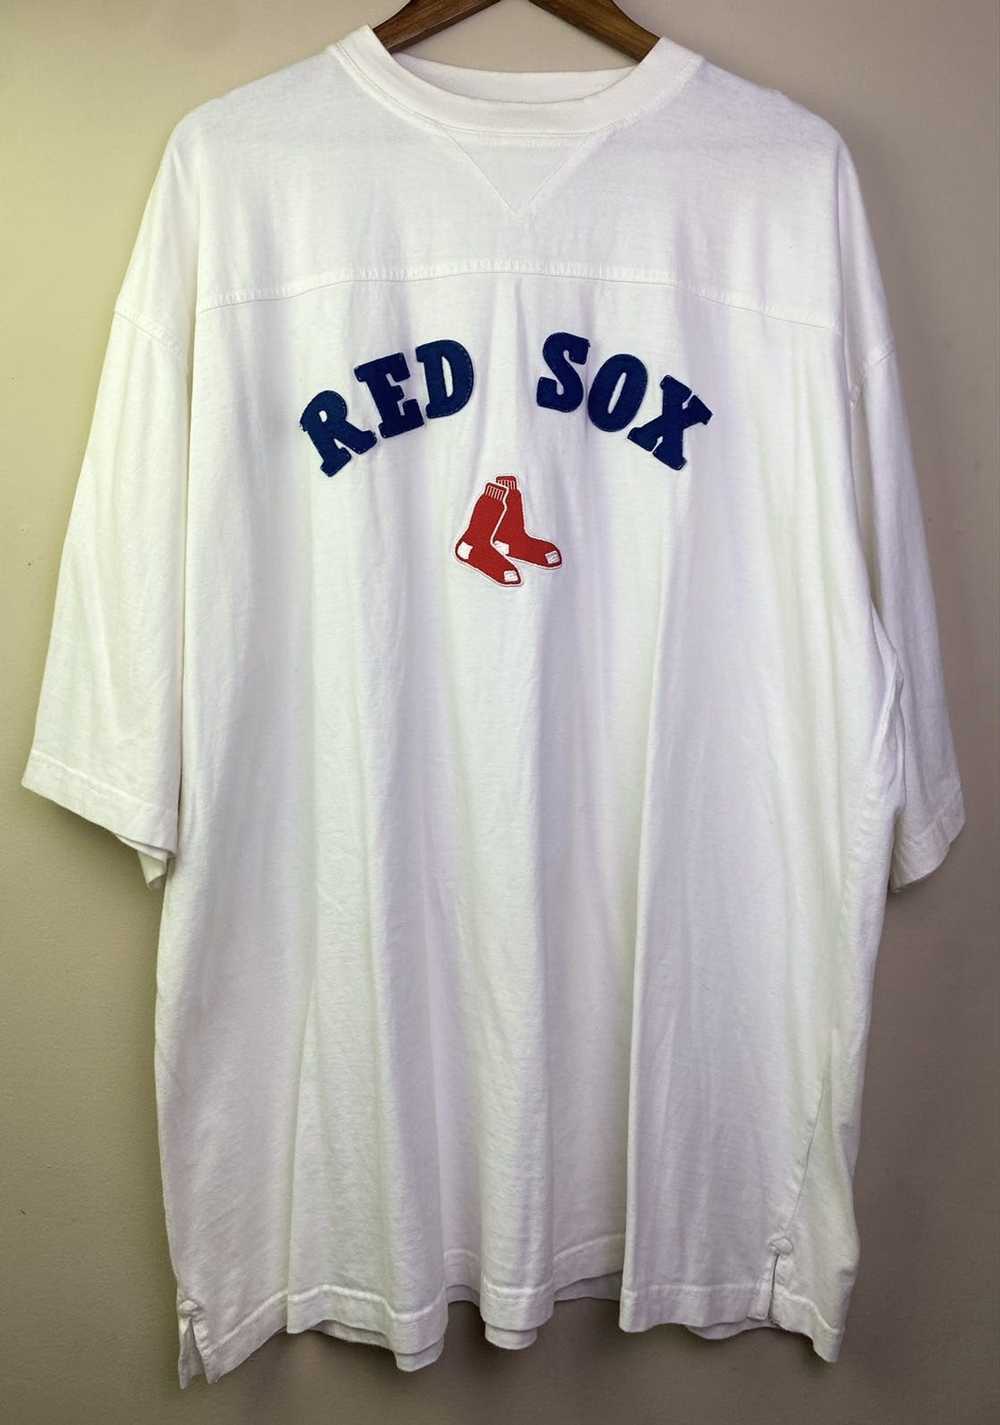 Majestic Cool Base Jason Varitek Boston Red Sox #33 Baseball Jersey Mens  Medium